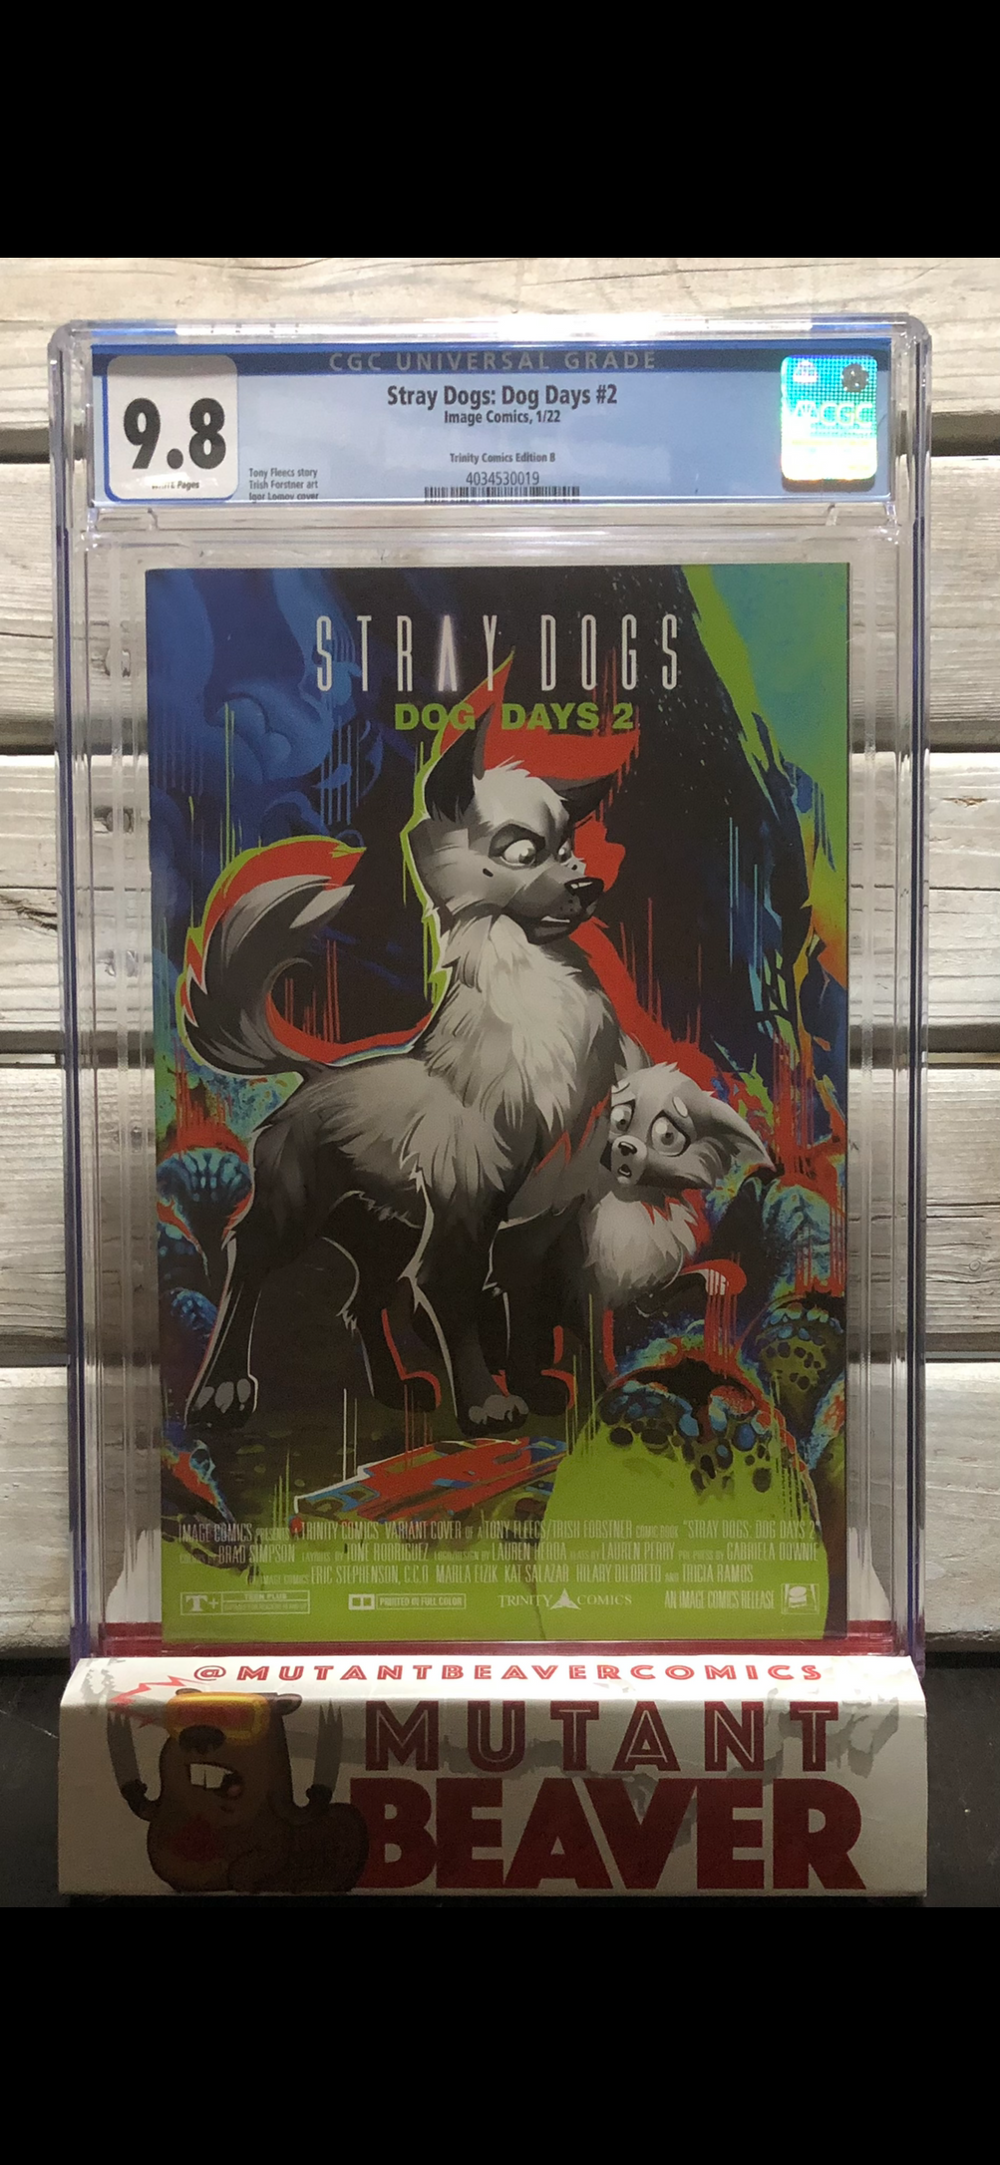 CGC 9.8 STRAY DOGS: DOG DAYS #2 Igor Lomov COVER B TRADE DRESS EXCLUSIVE